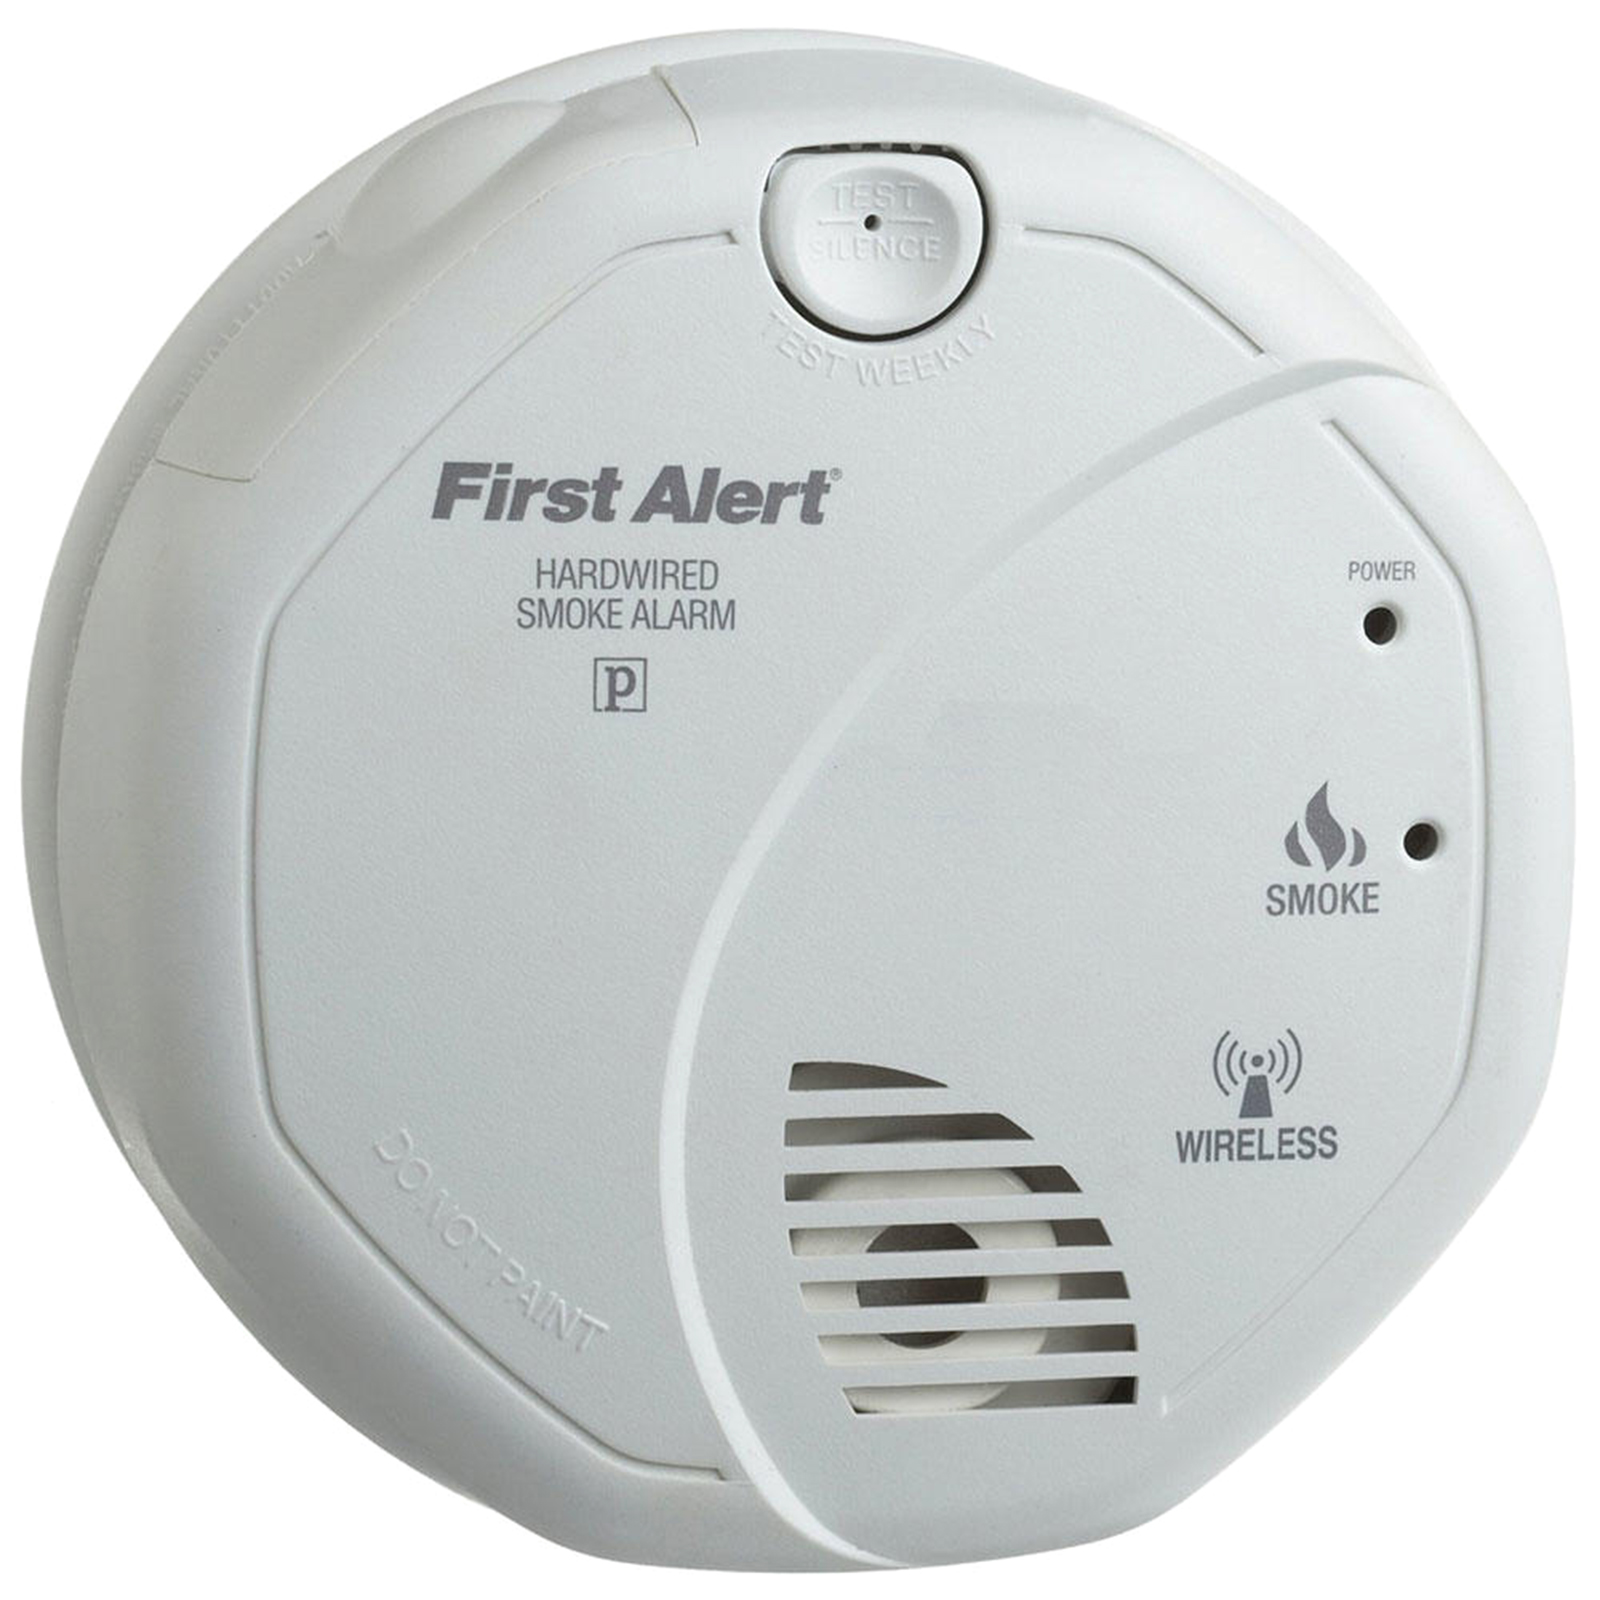 First Alert Onelink Wireless Hardwired Smoke Alarm